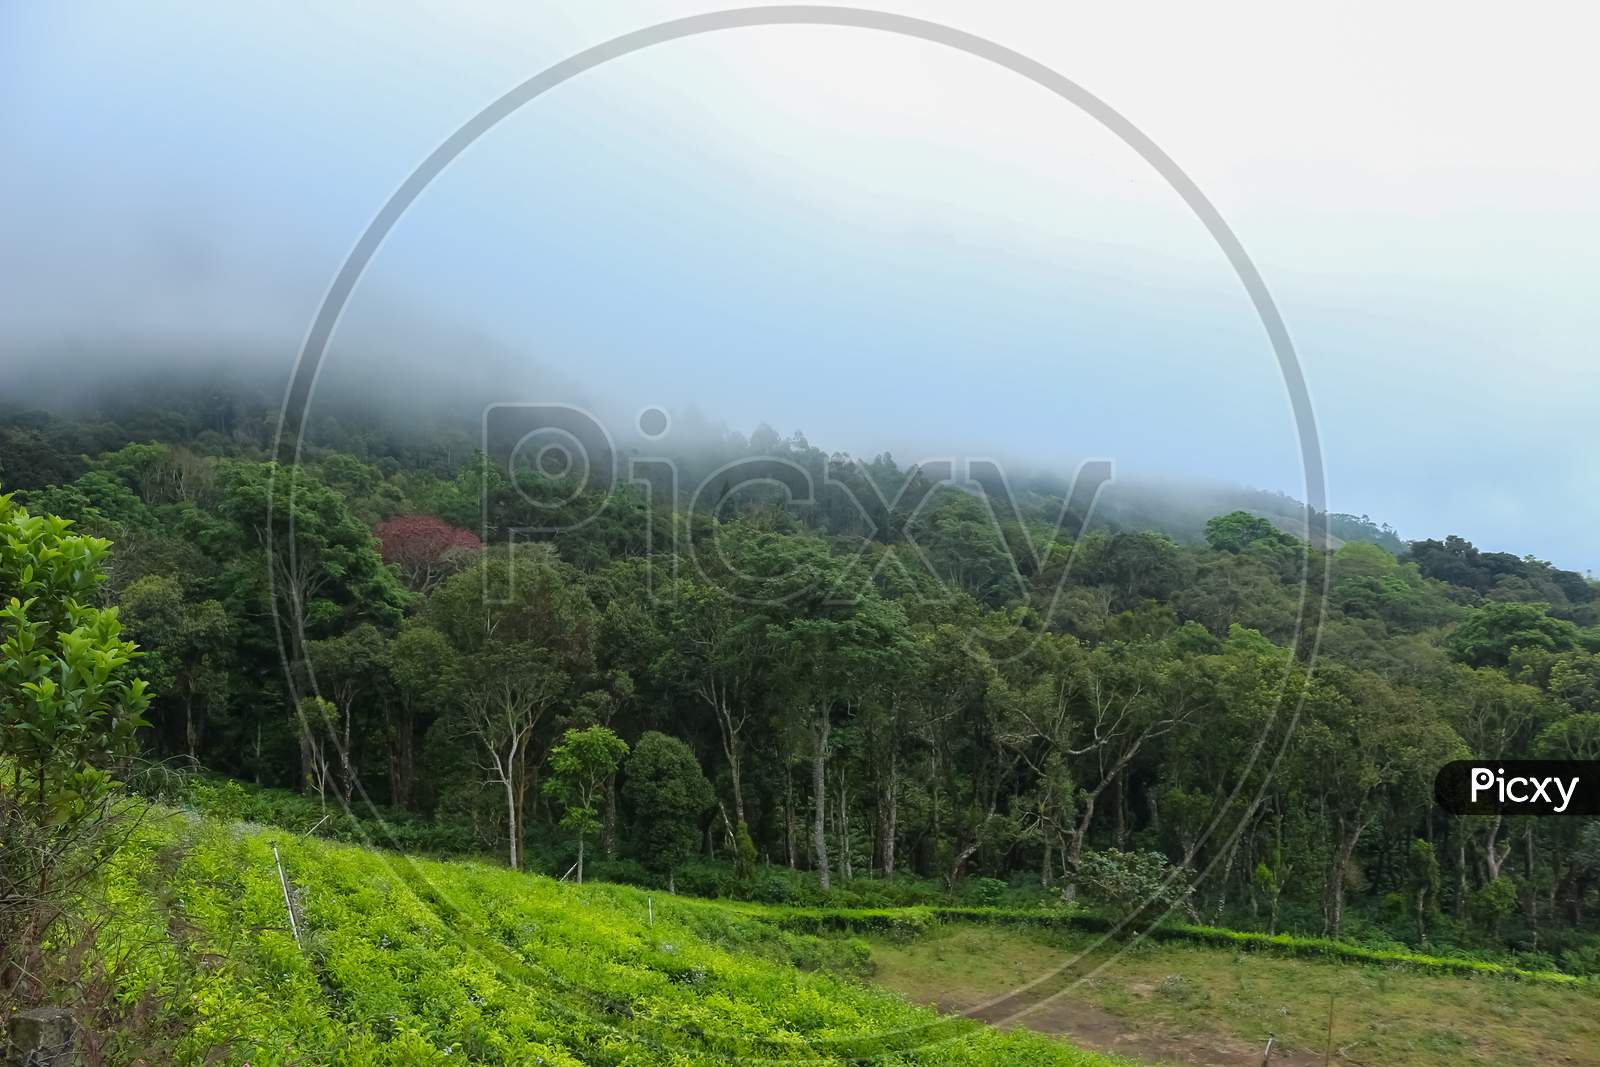 Munnar Garden And Tea Plantation . Tea Plantations In Munnar, Kerala, India. Stock Images